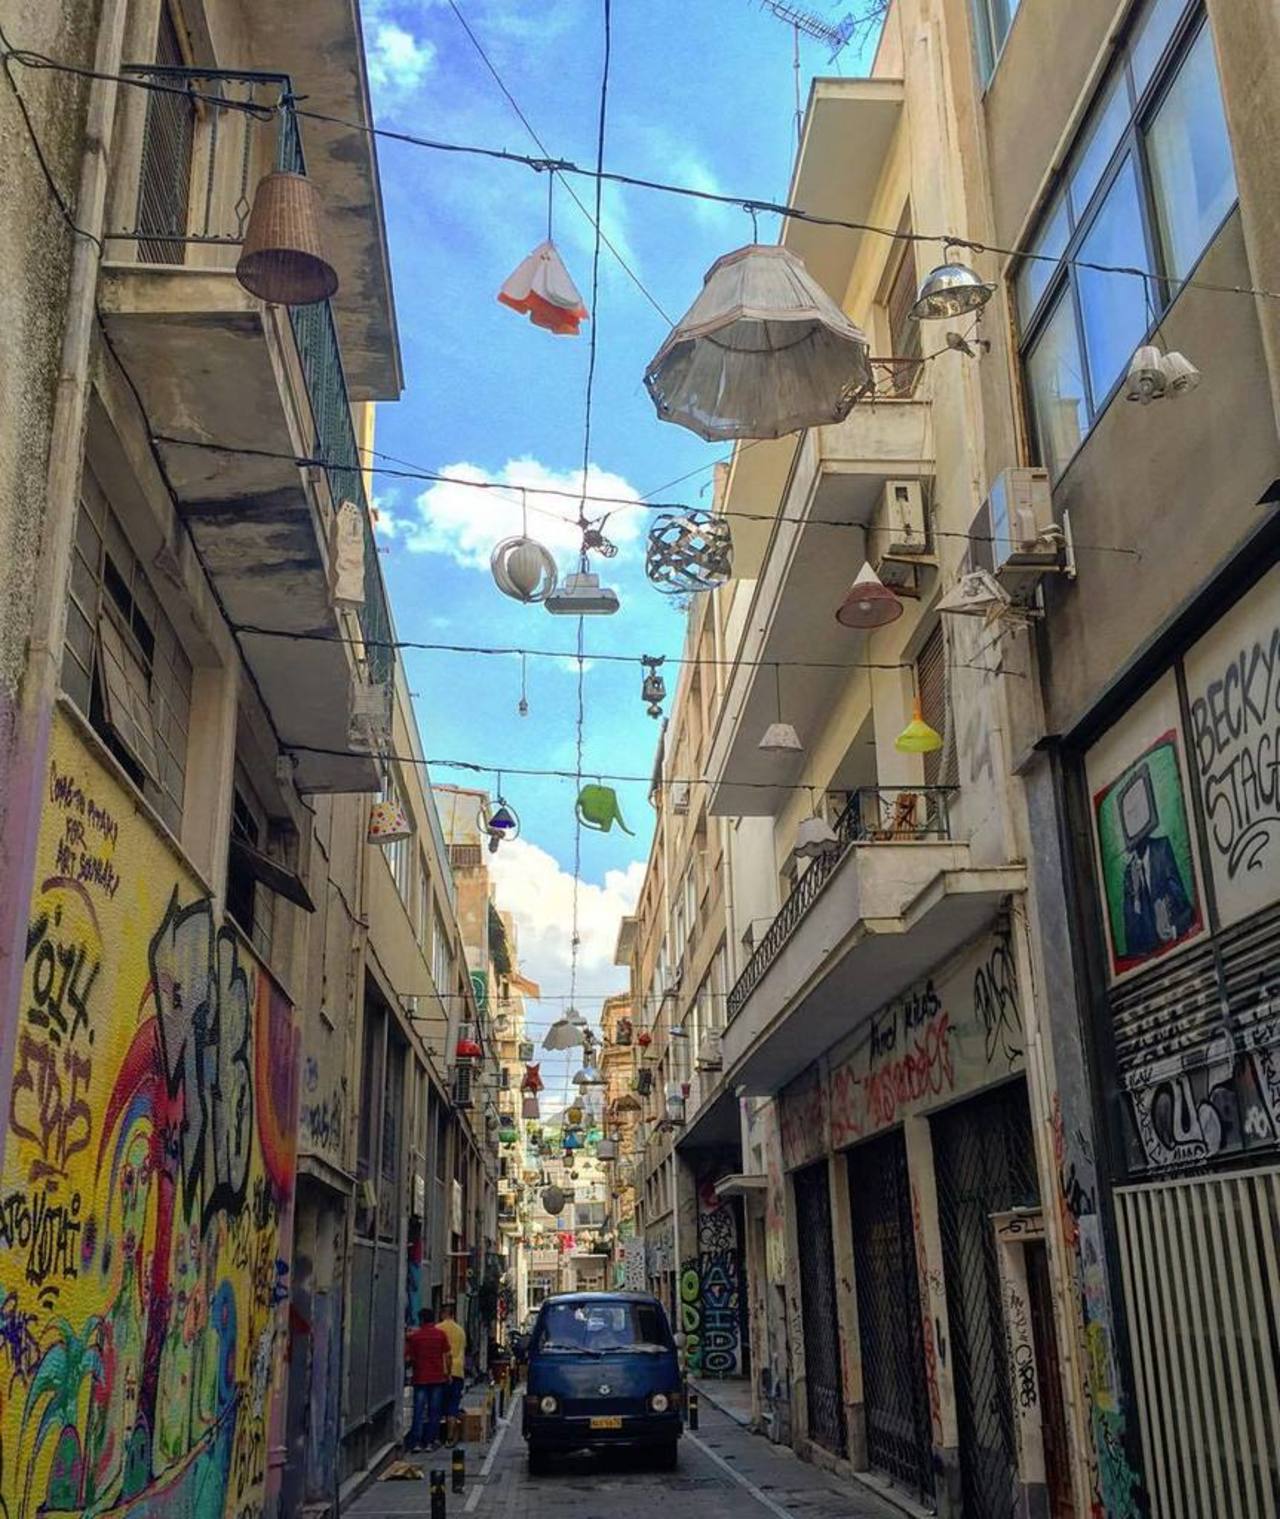 #athens #greece #street #lamps #graffiti #streetart #explore #crazy #travel #wonder #sky #… http://ift.tt/1PWIKUE http://t.co/uTIpz5hx4X